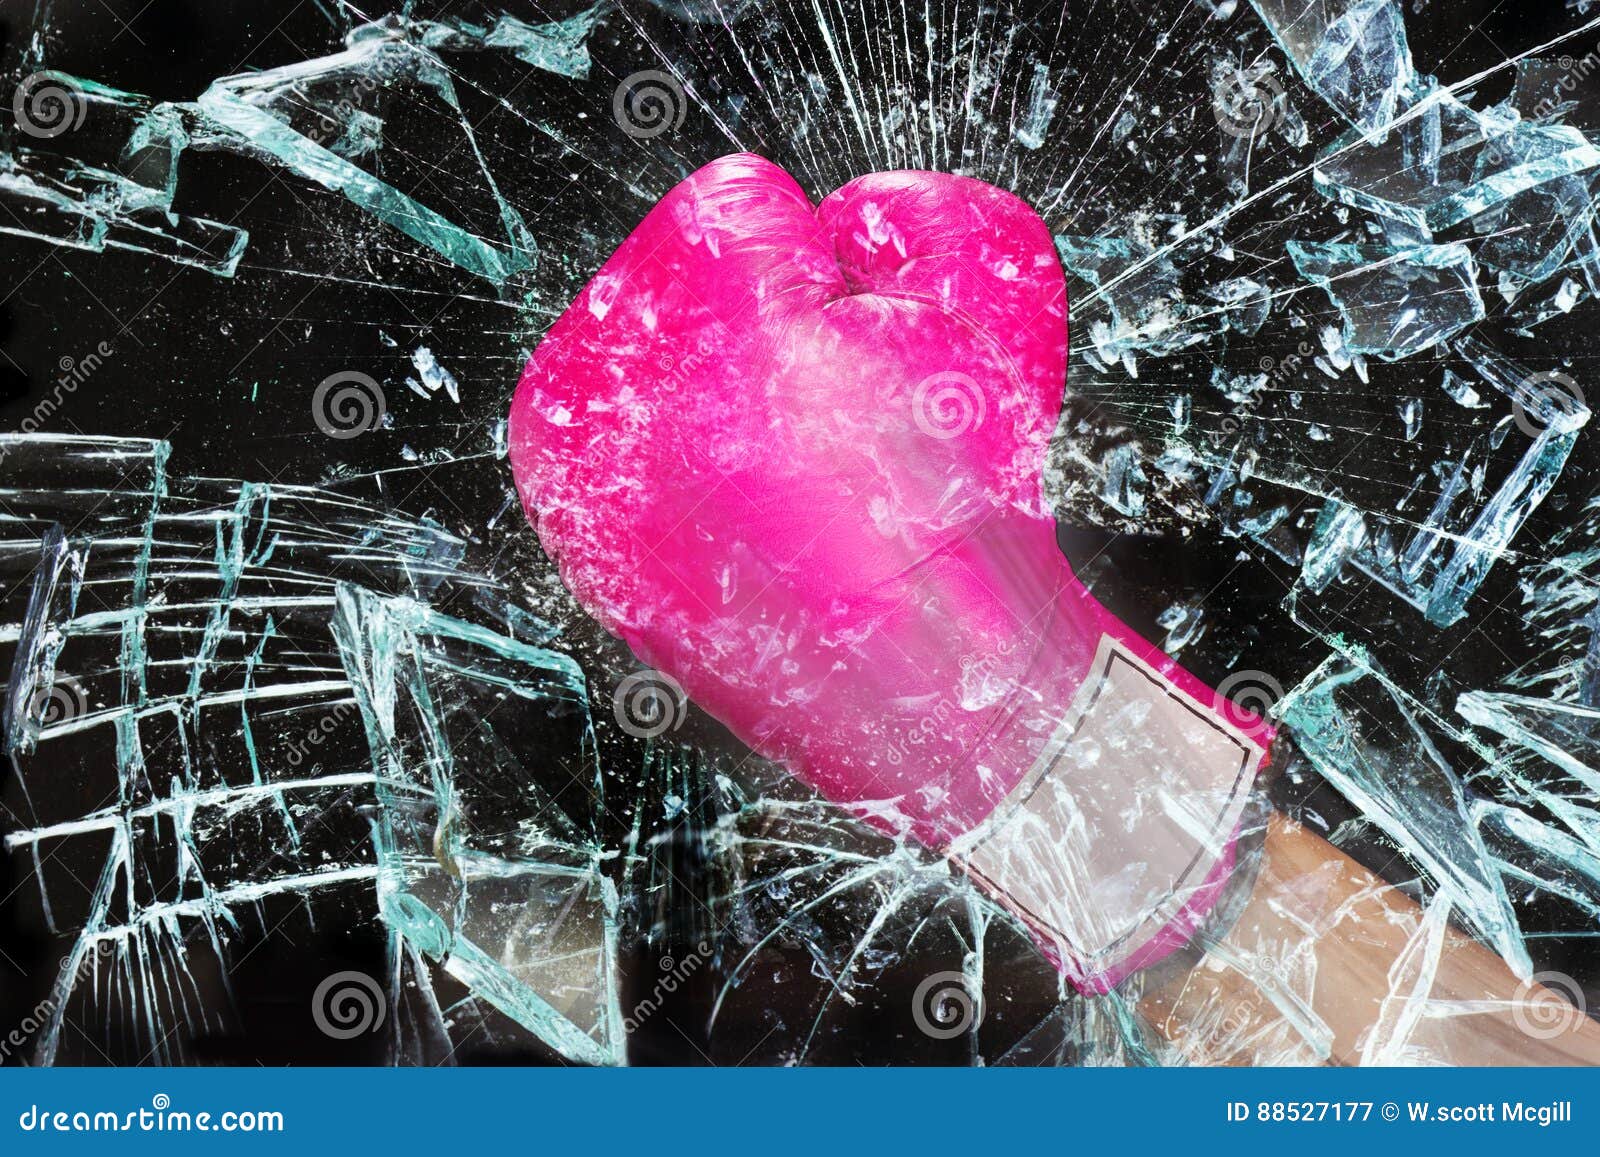 pink girl power breaking glass..